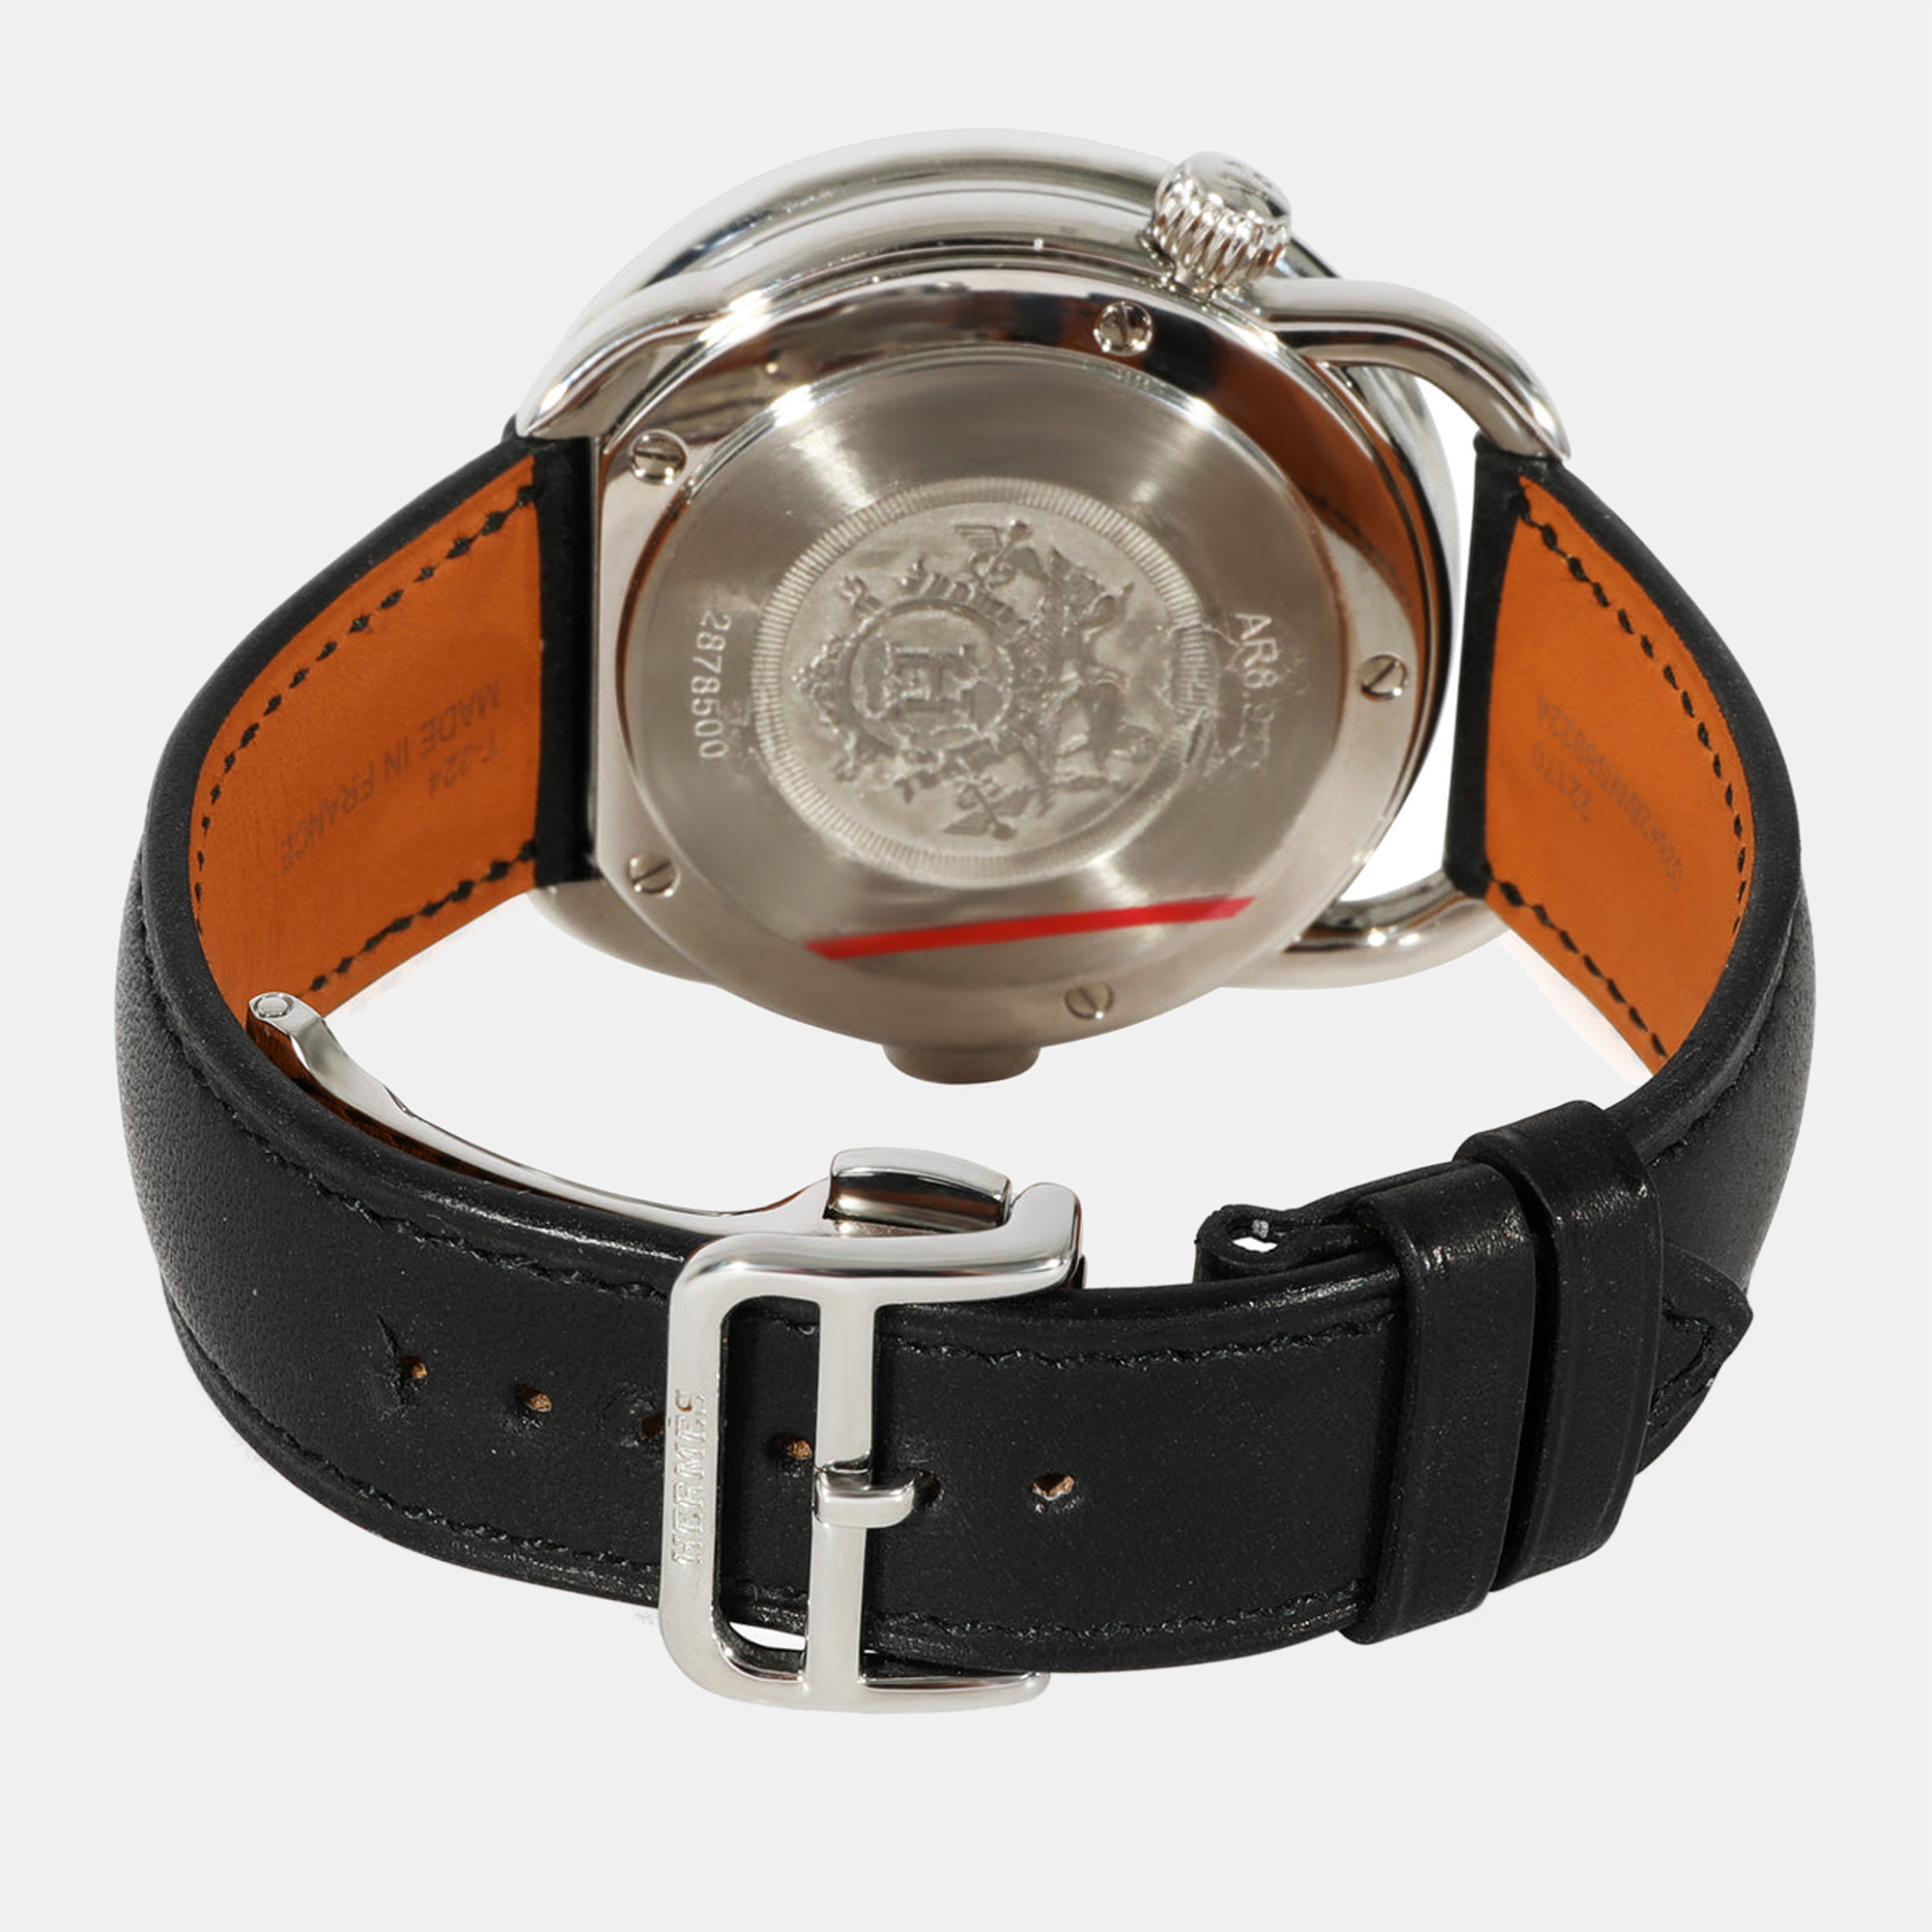 Hermes Black Stainless Steel Arceau AR8.910.330.MNO Automatic Men's Wristwatch 42mm